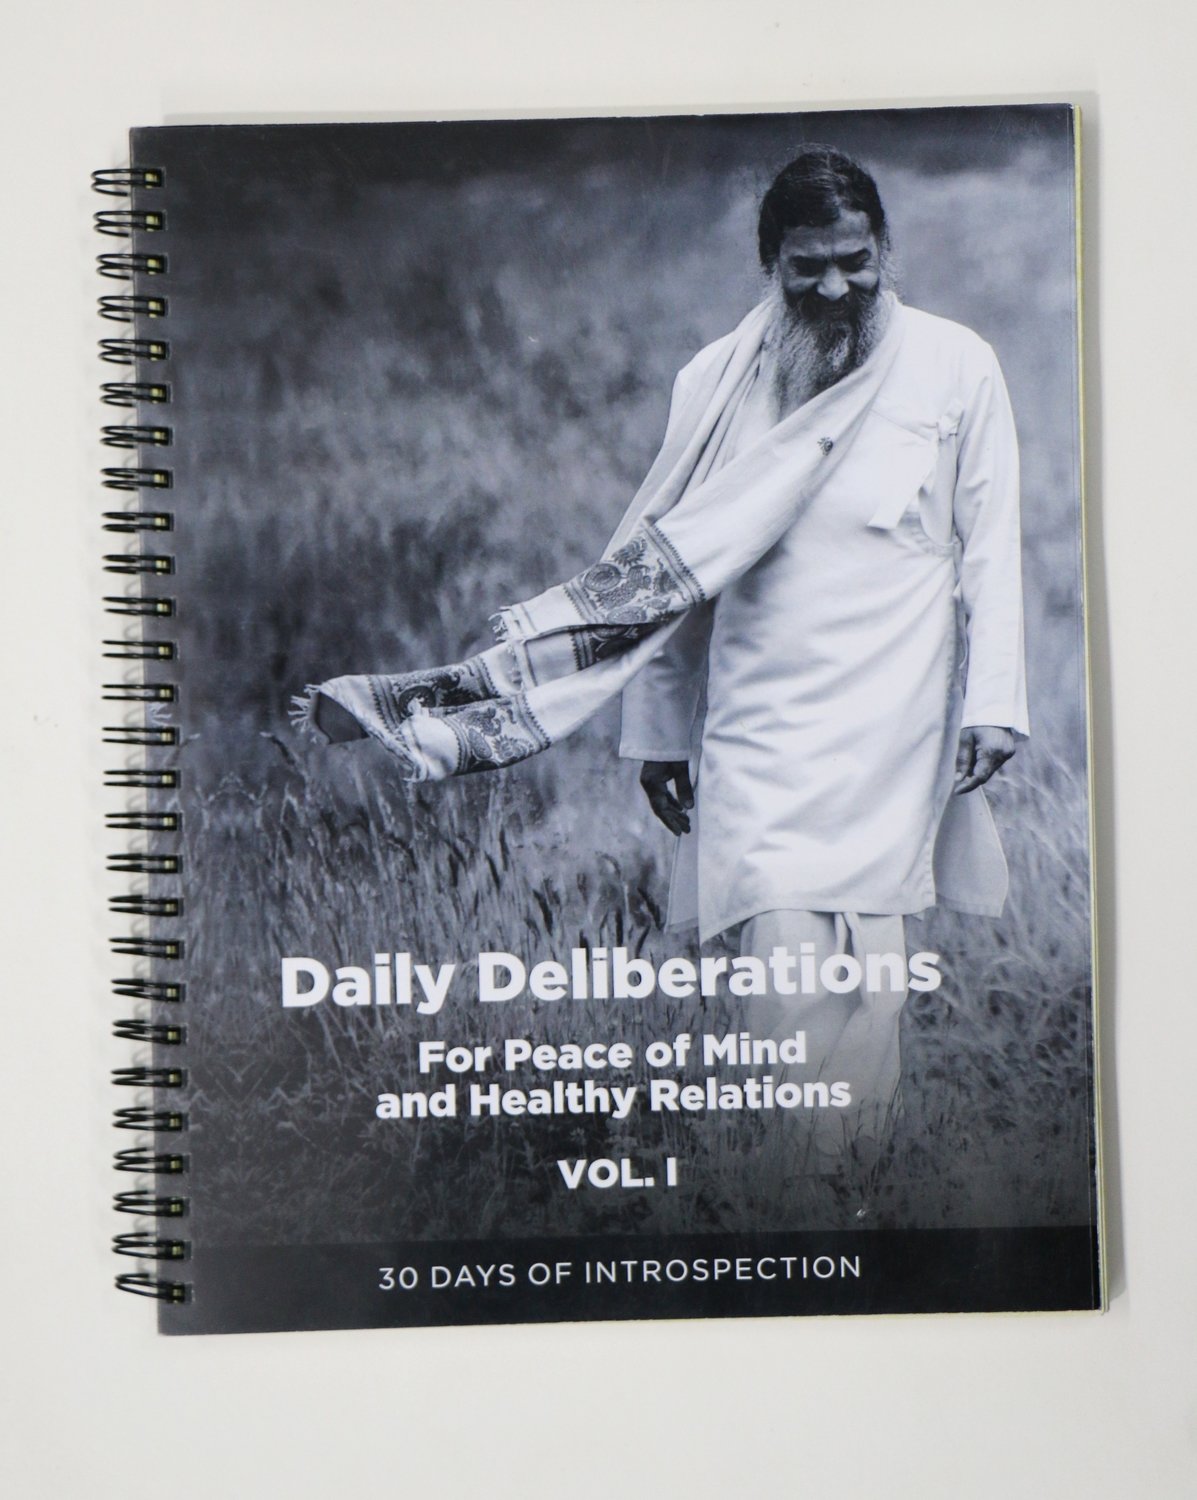 Babaji's Daily Deliberations Vol. I